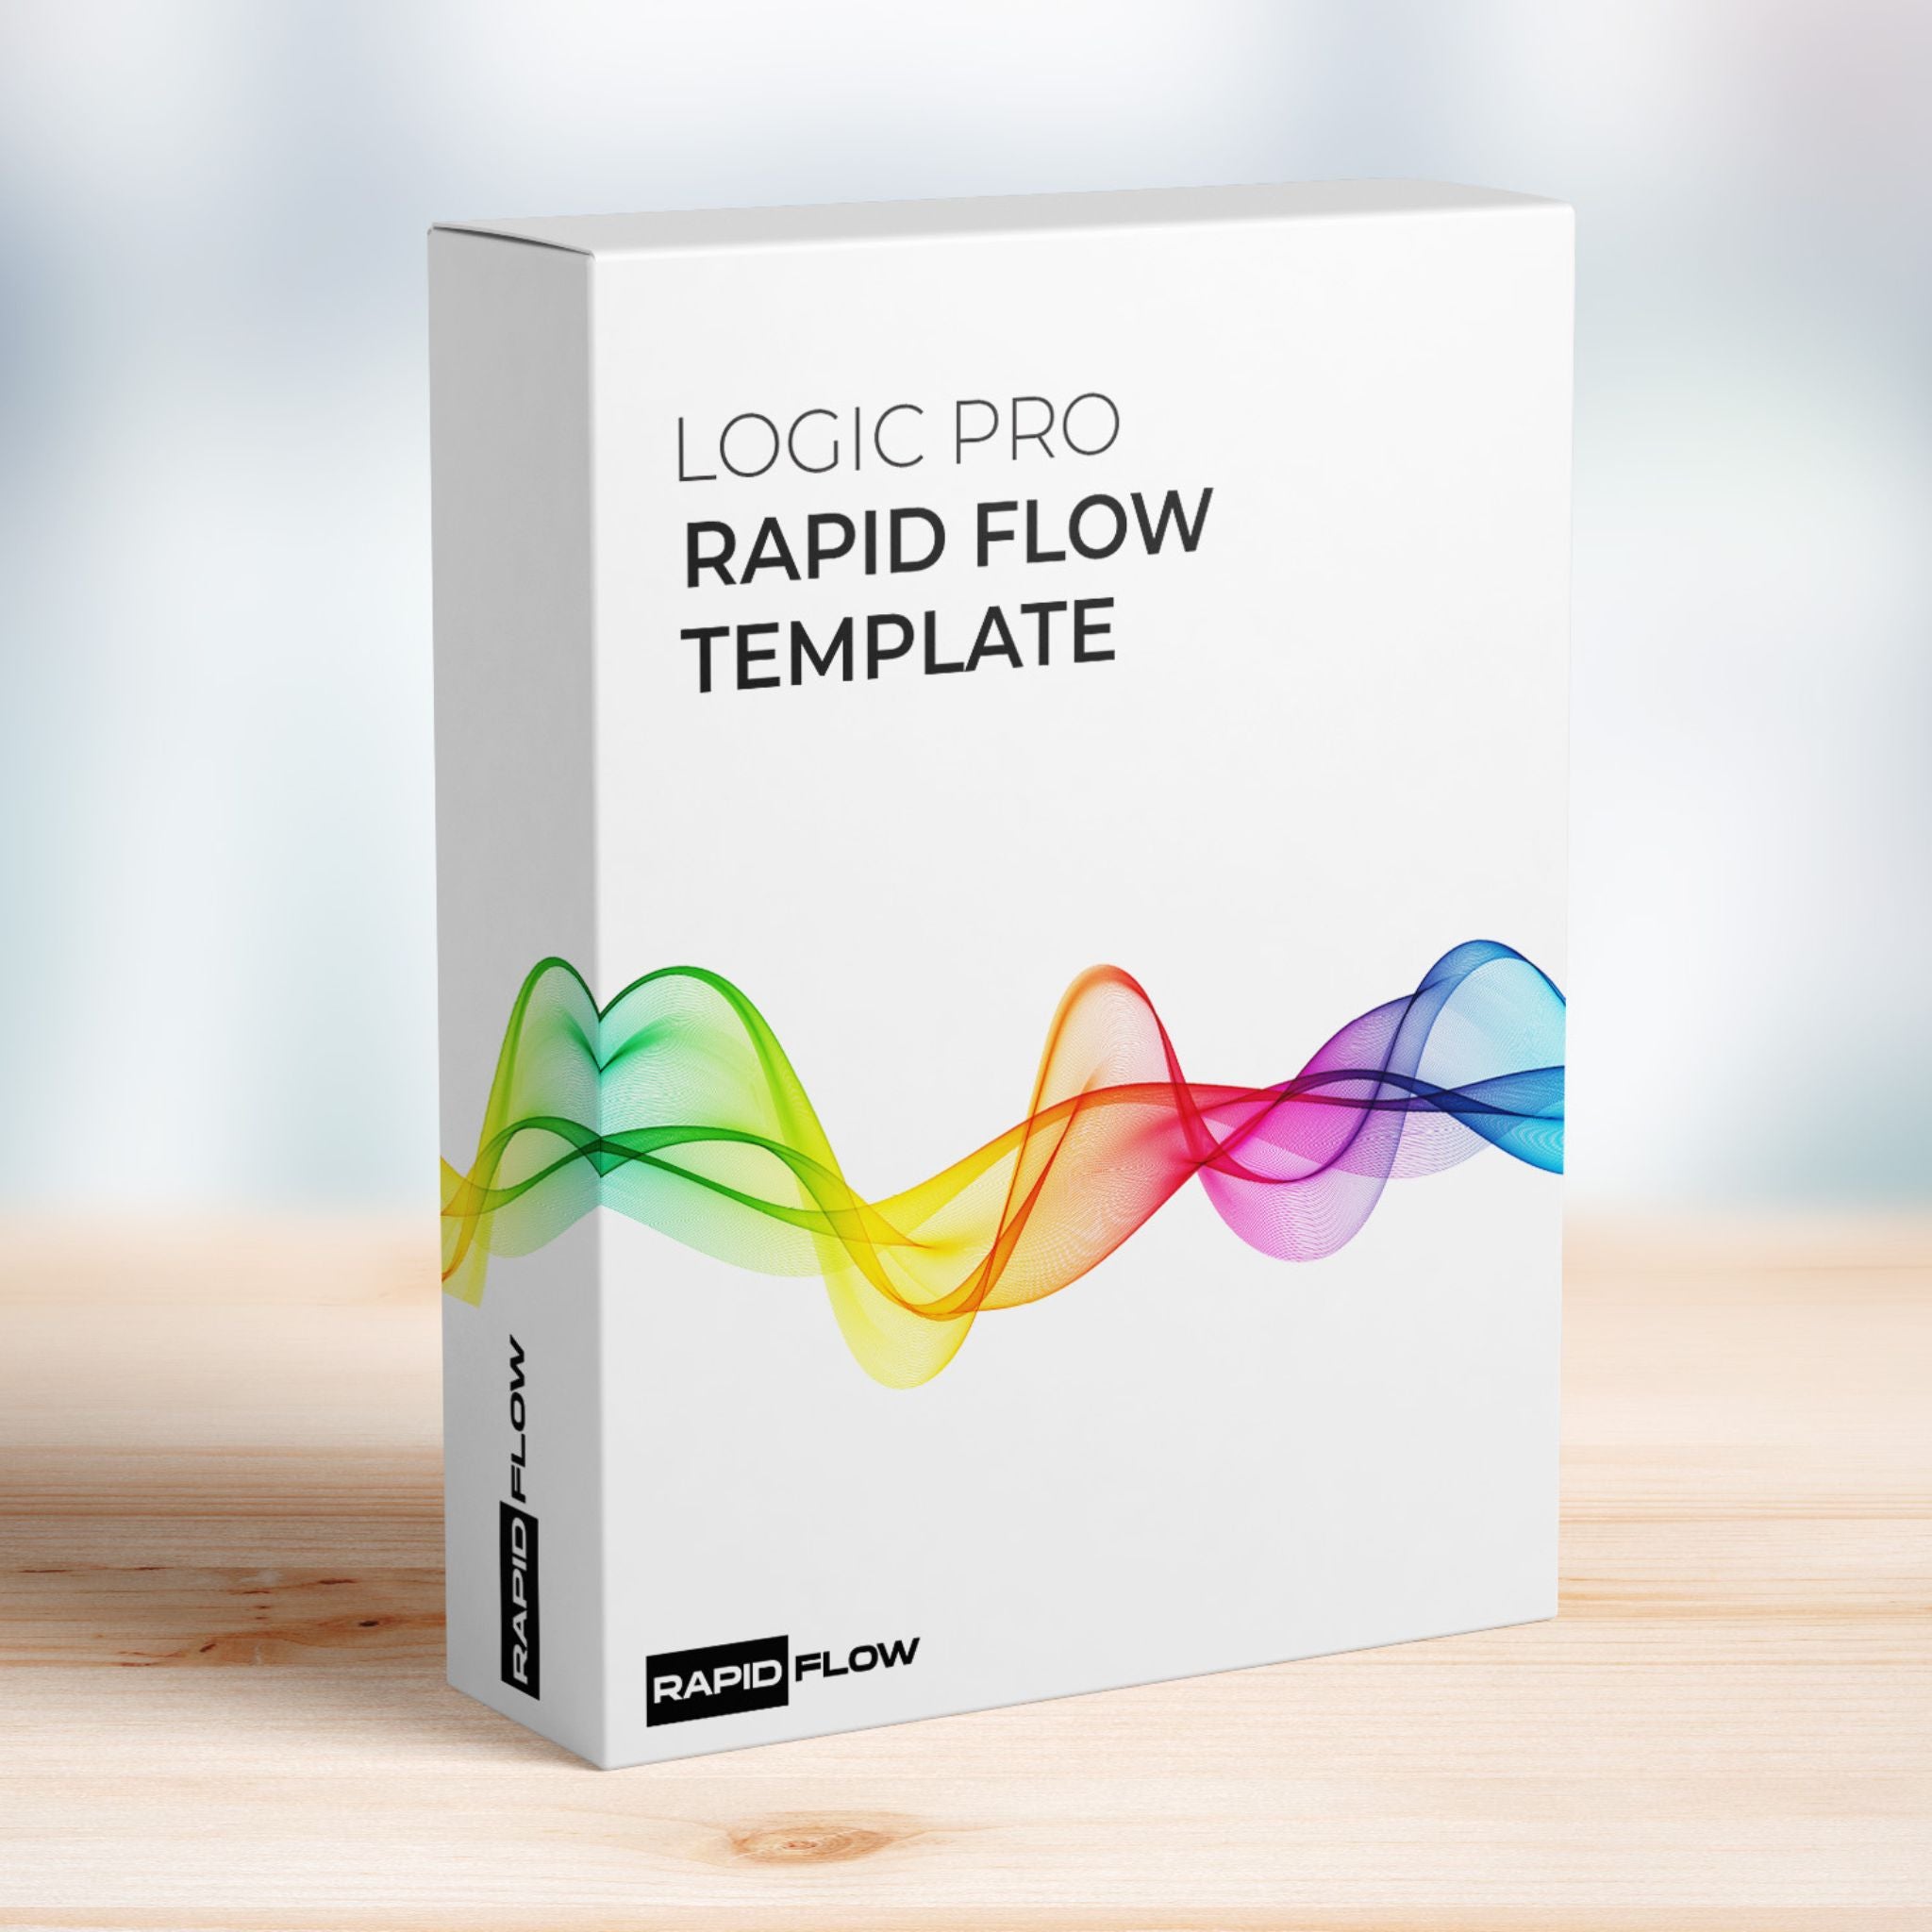 Logic Pro Rapid Flow Template